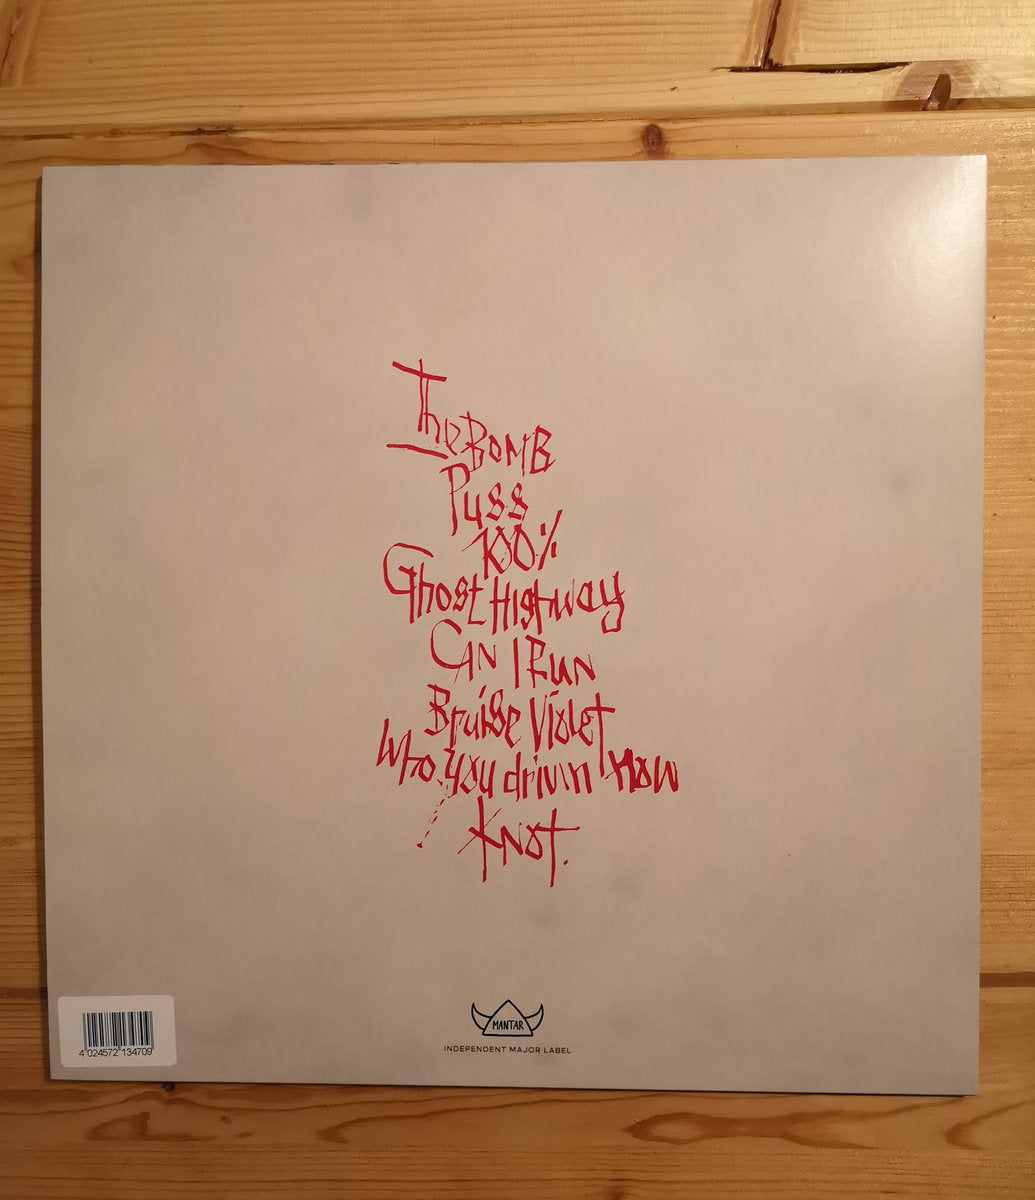 MANTAR - Grungetown Hooligans II - 12" Vinyl LP